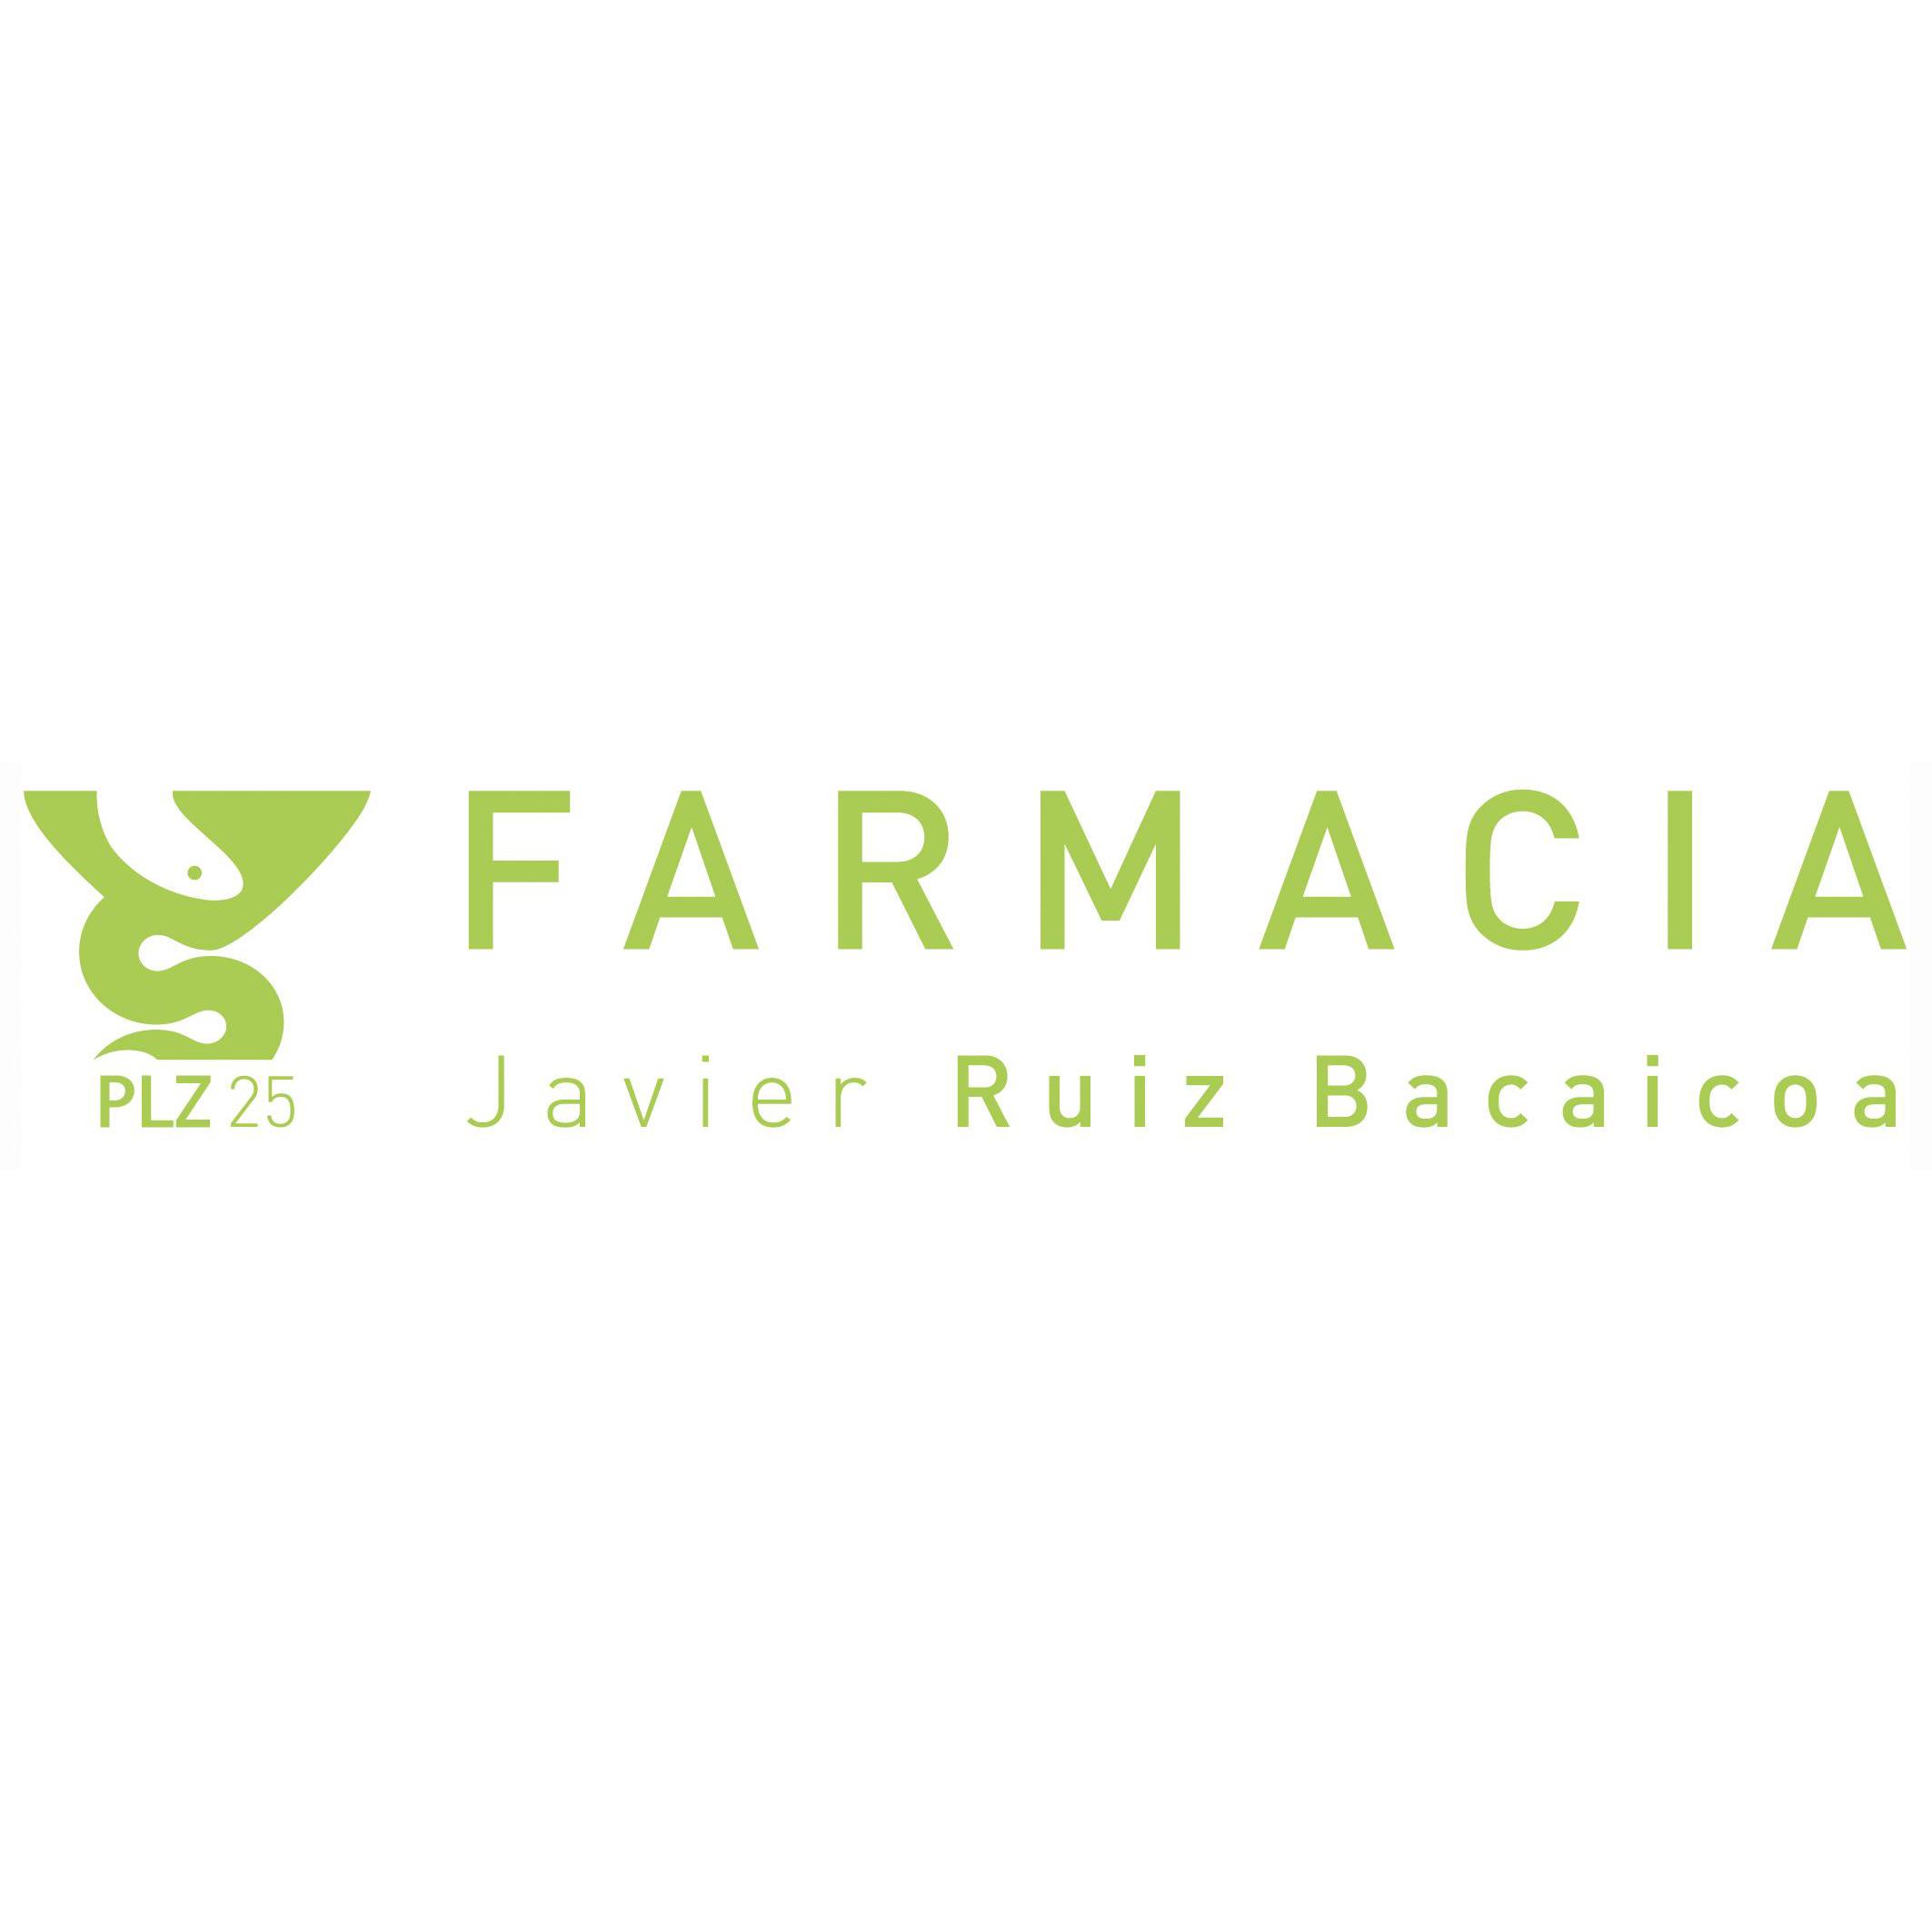 Farmacia Ruiz Bacaicoa Logo